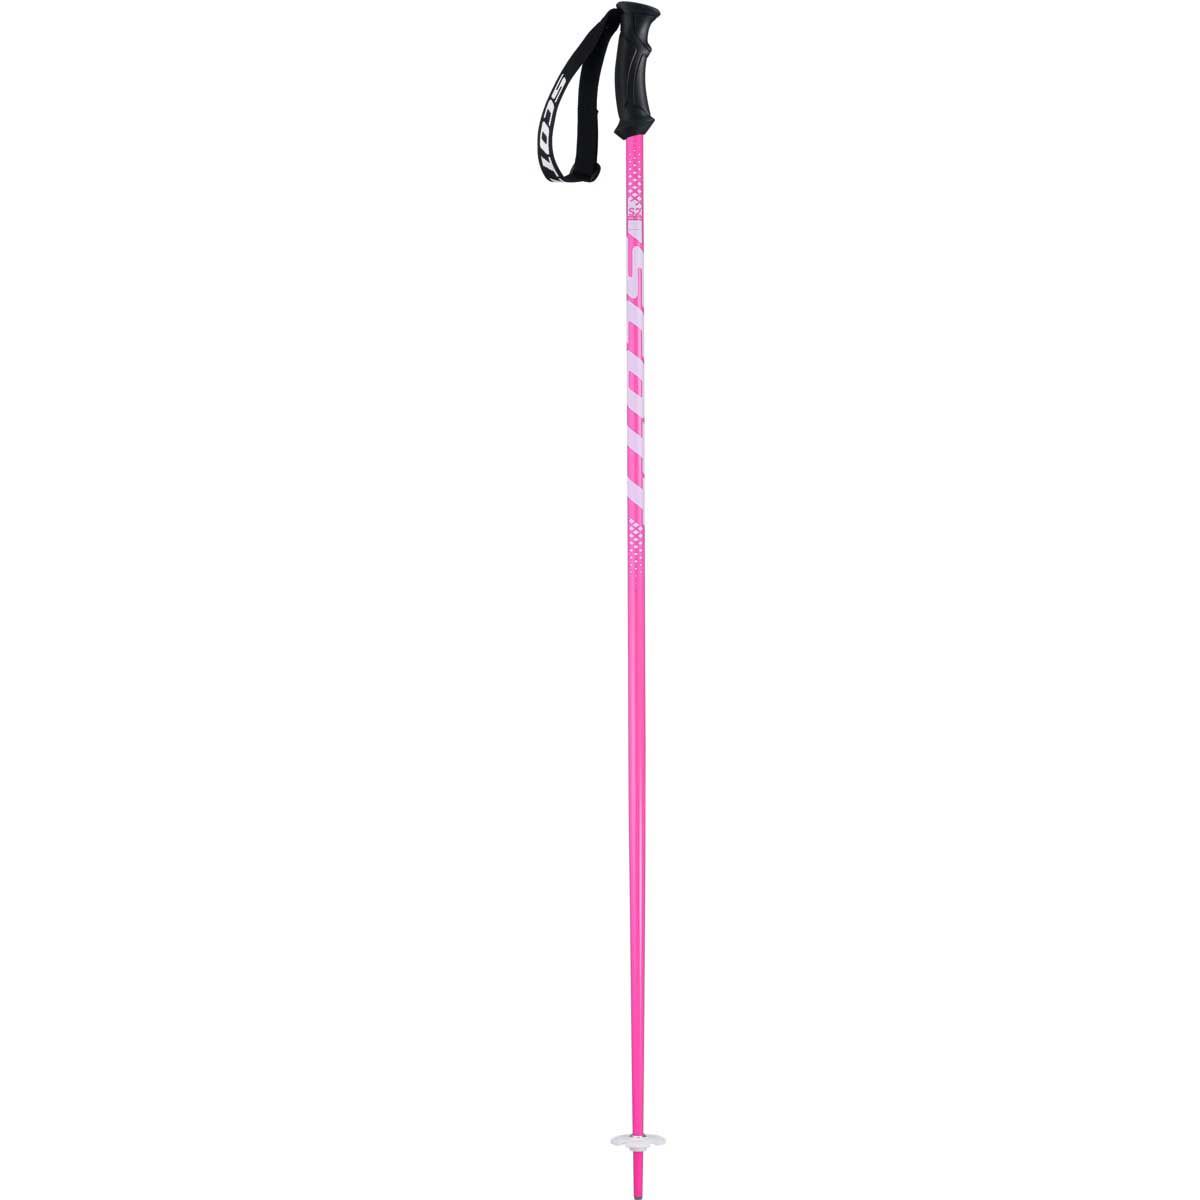 Bâtons de ski Pole SMU 540 P-Lite Black Pink